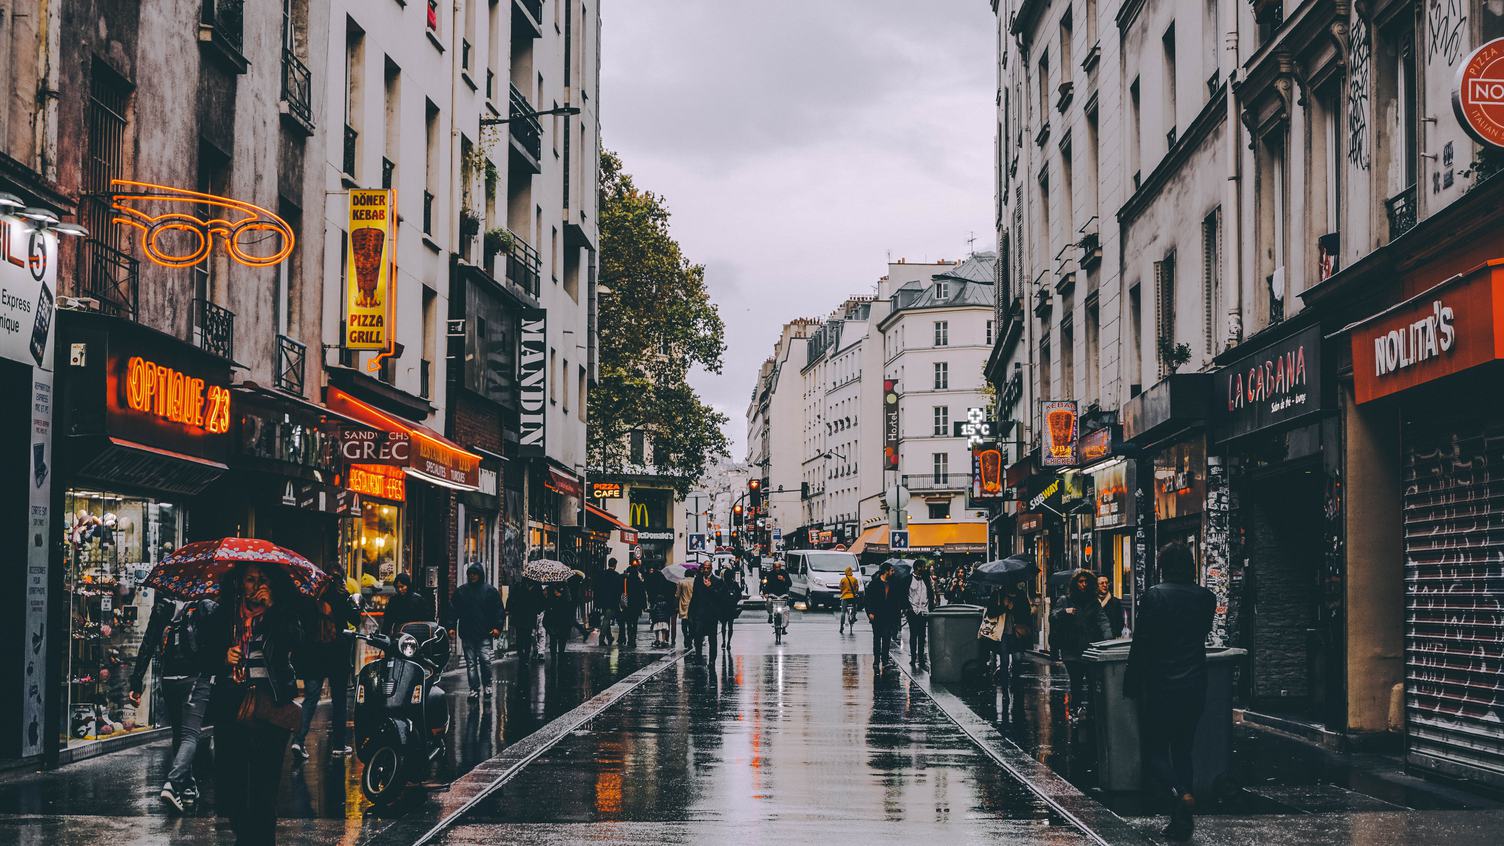 Paris Street on a Rainy Day